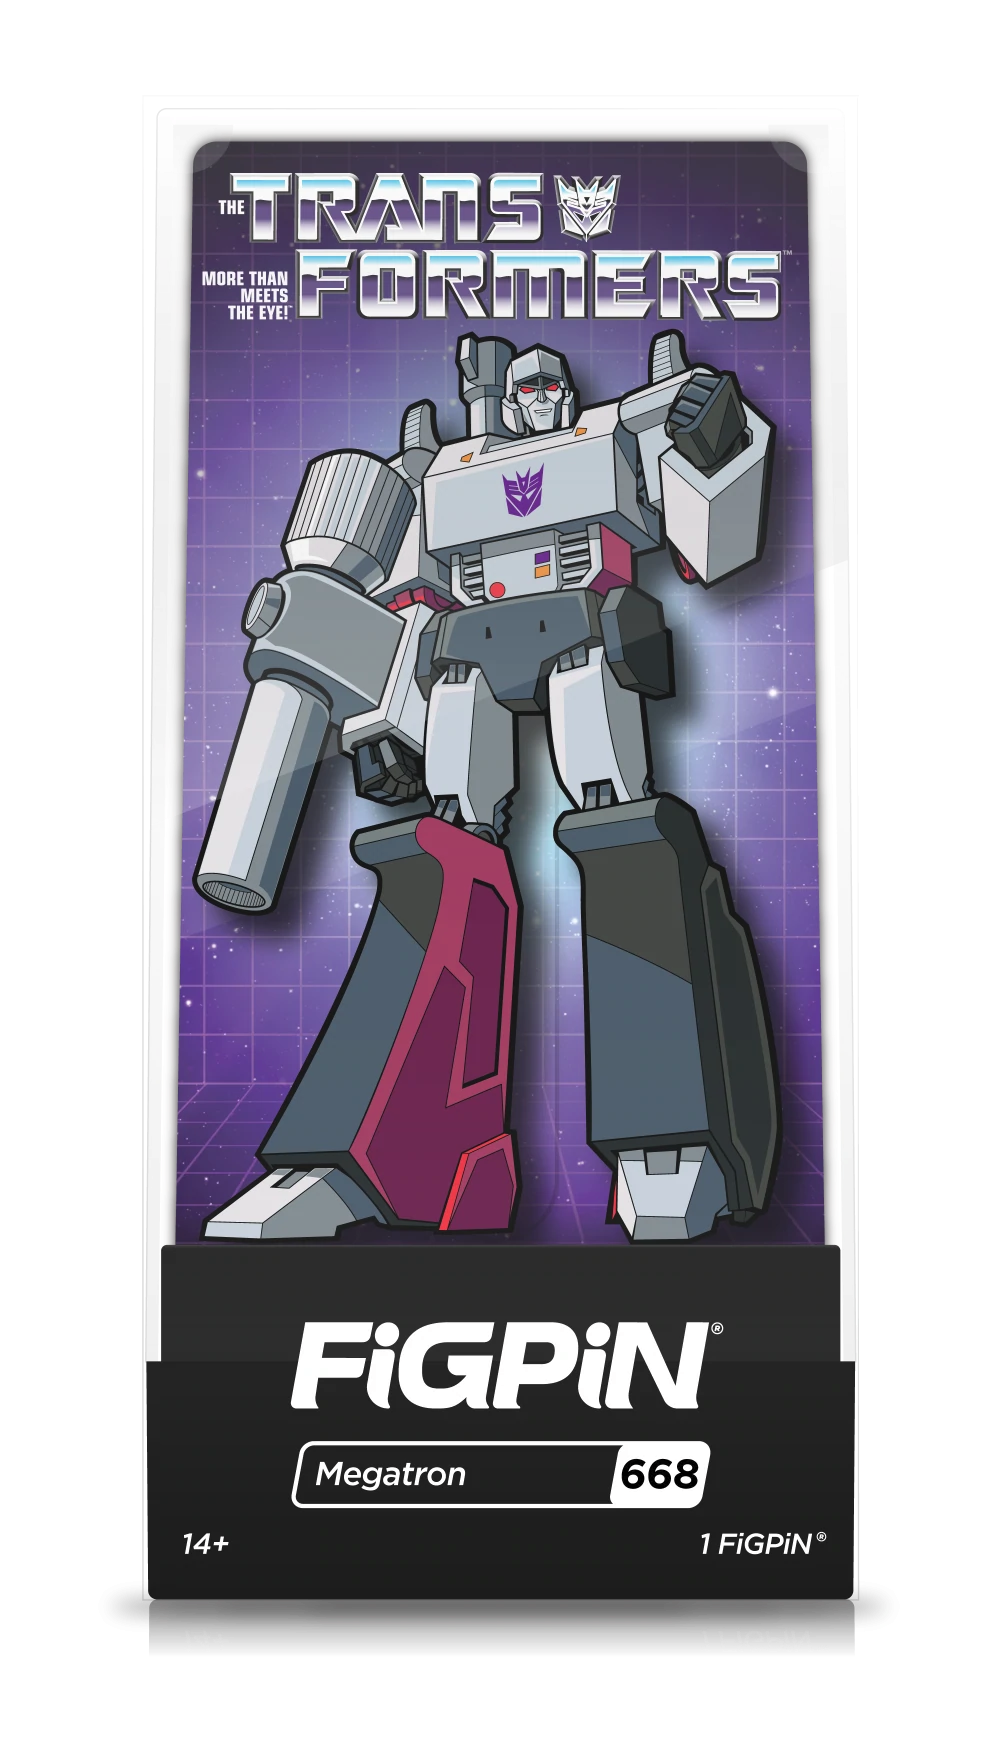 FiGPiN Megatron (668) Collectable Enamel Pin MK5WJG2Y1S |28287|